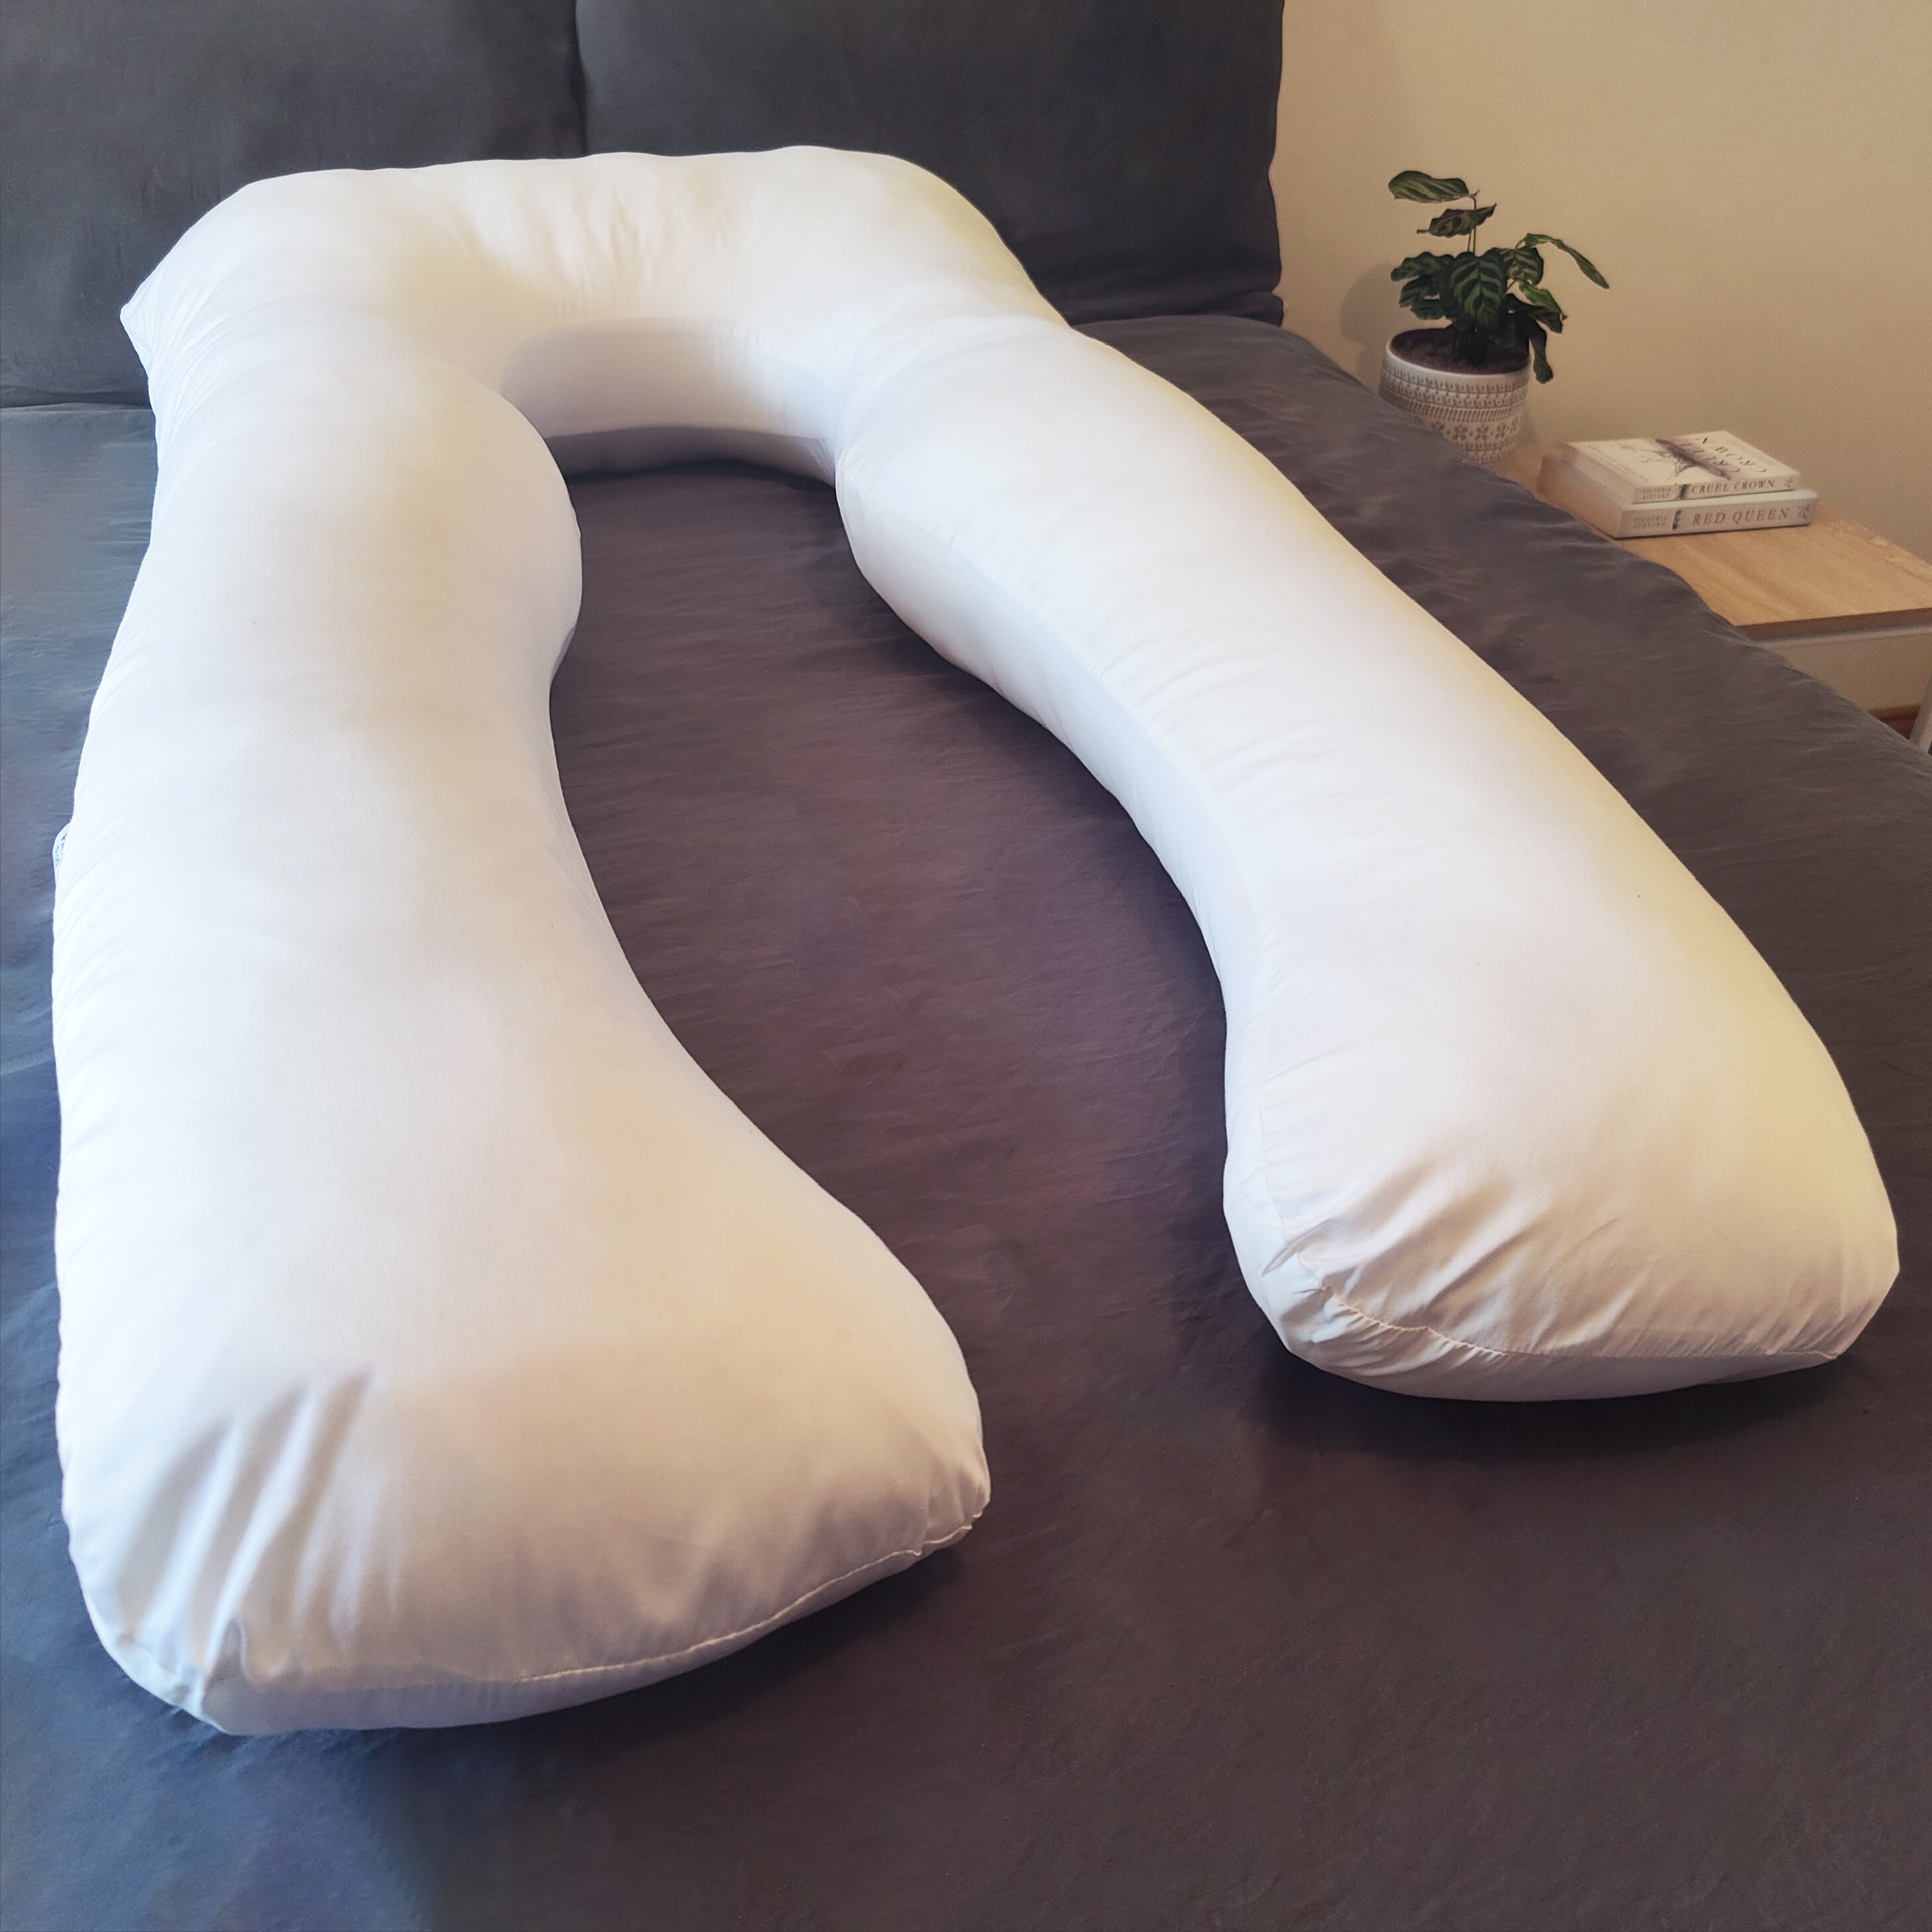 [PREORDER ONLY] Memory Foam Pillow Pod Support Pillow